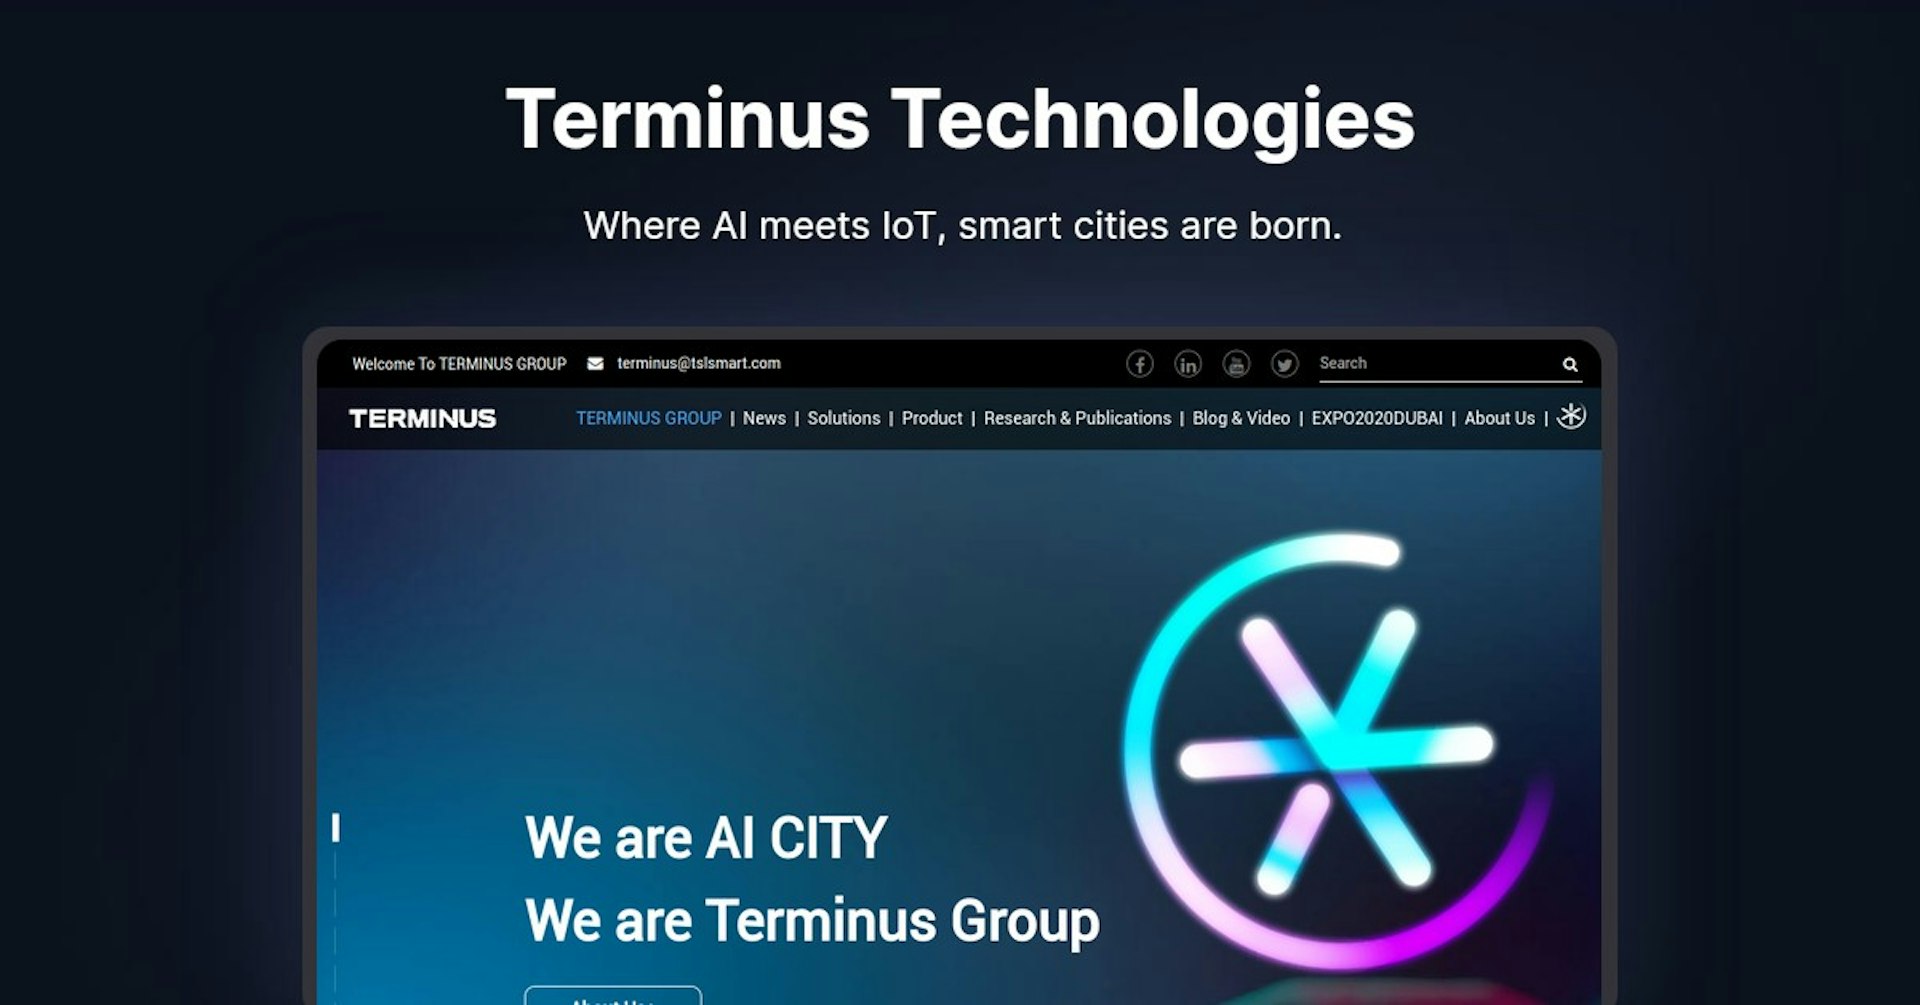 Terminus Technologies